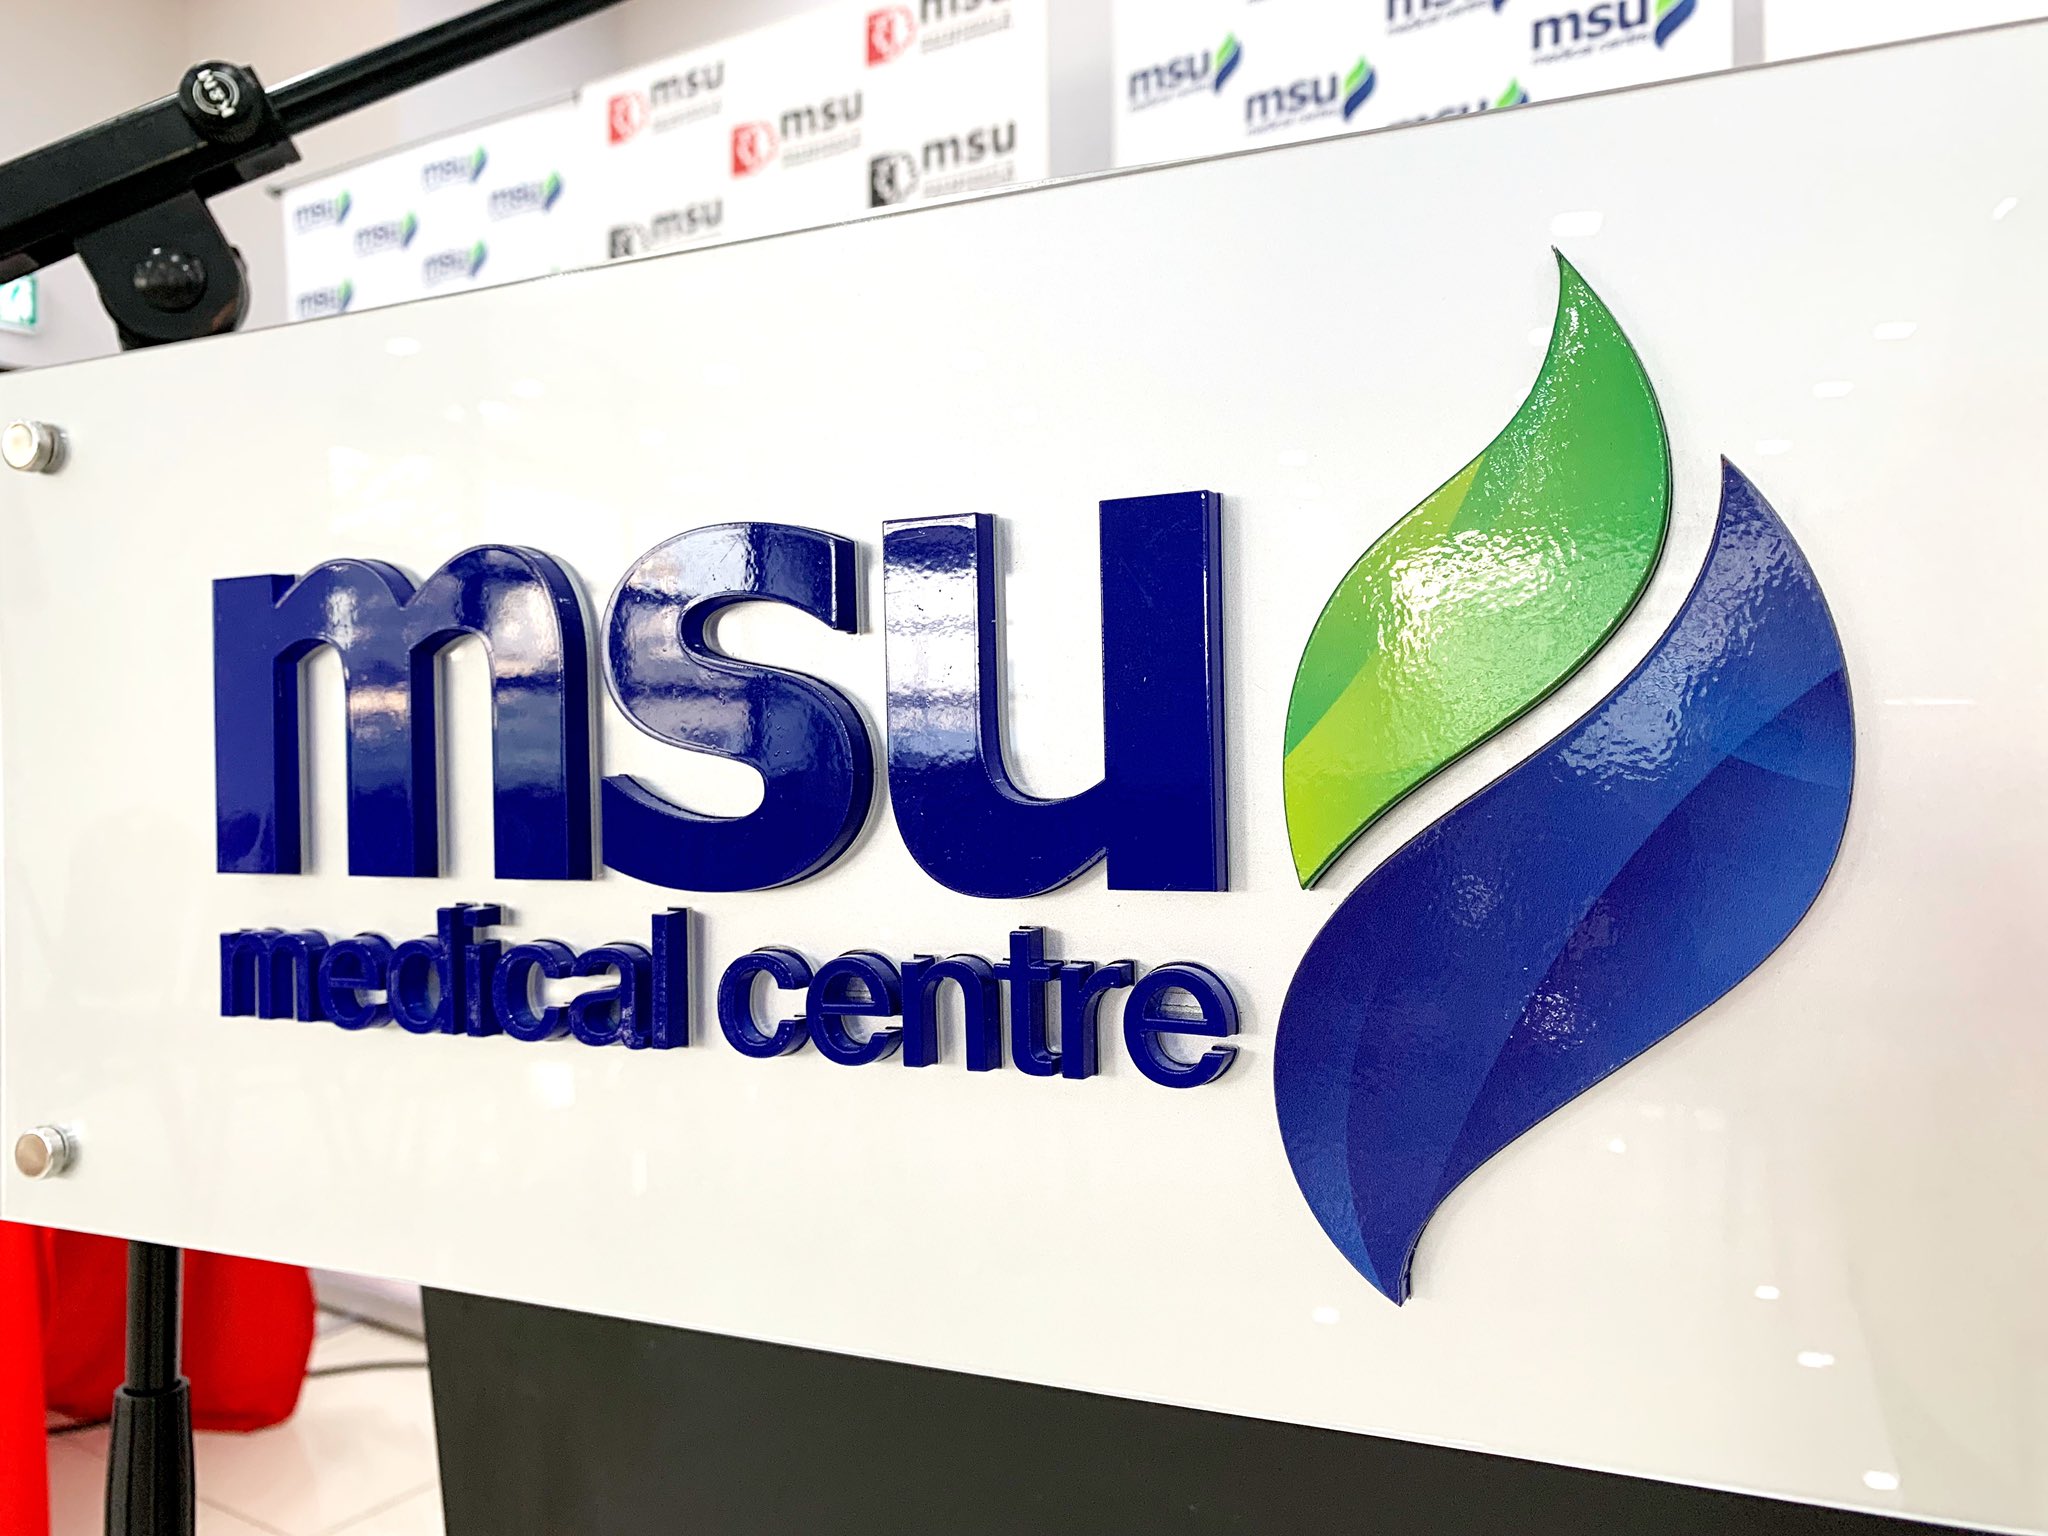 Msu medical centre